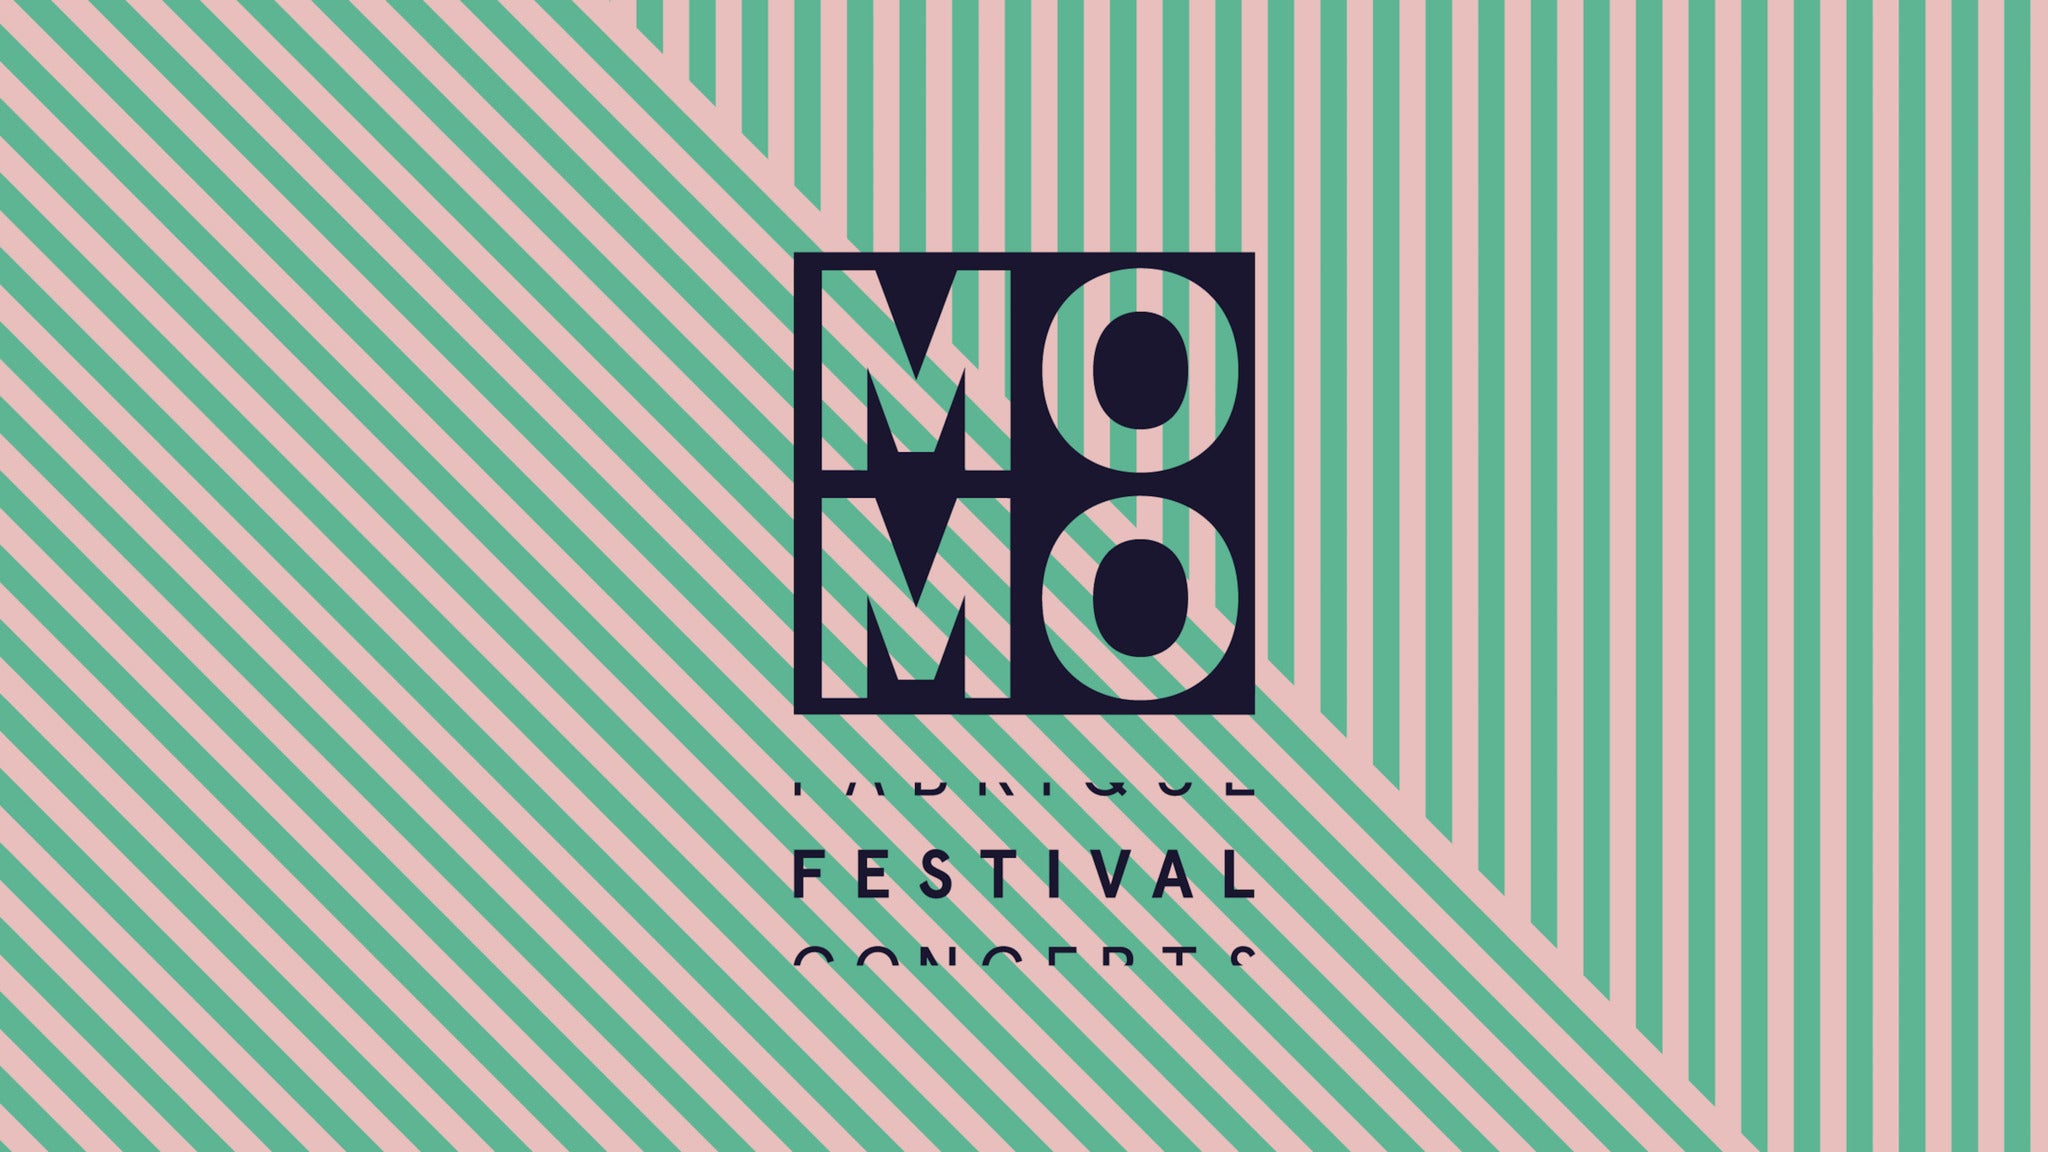 Motel Mozaique Festival 2022 - Dayticket thursday